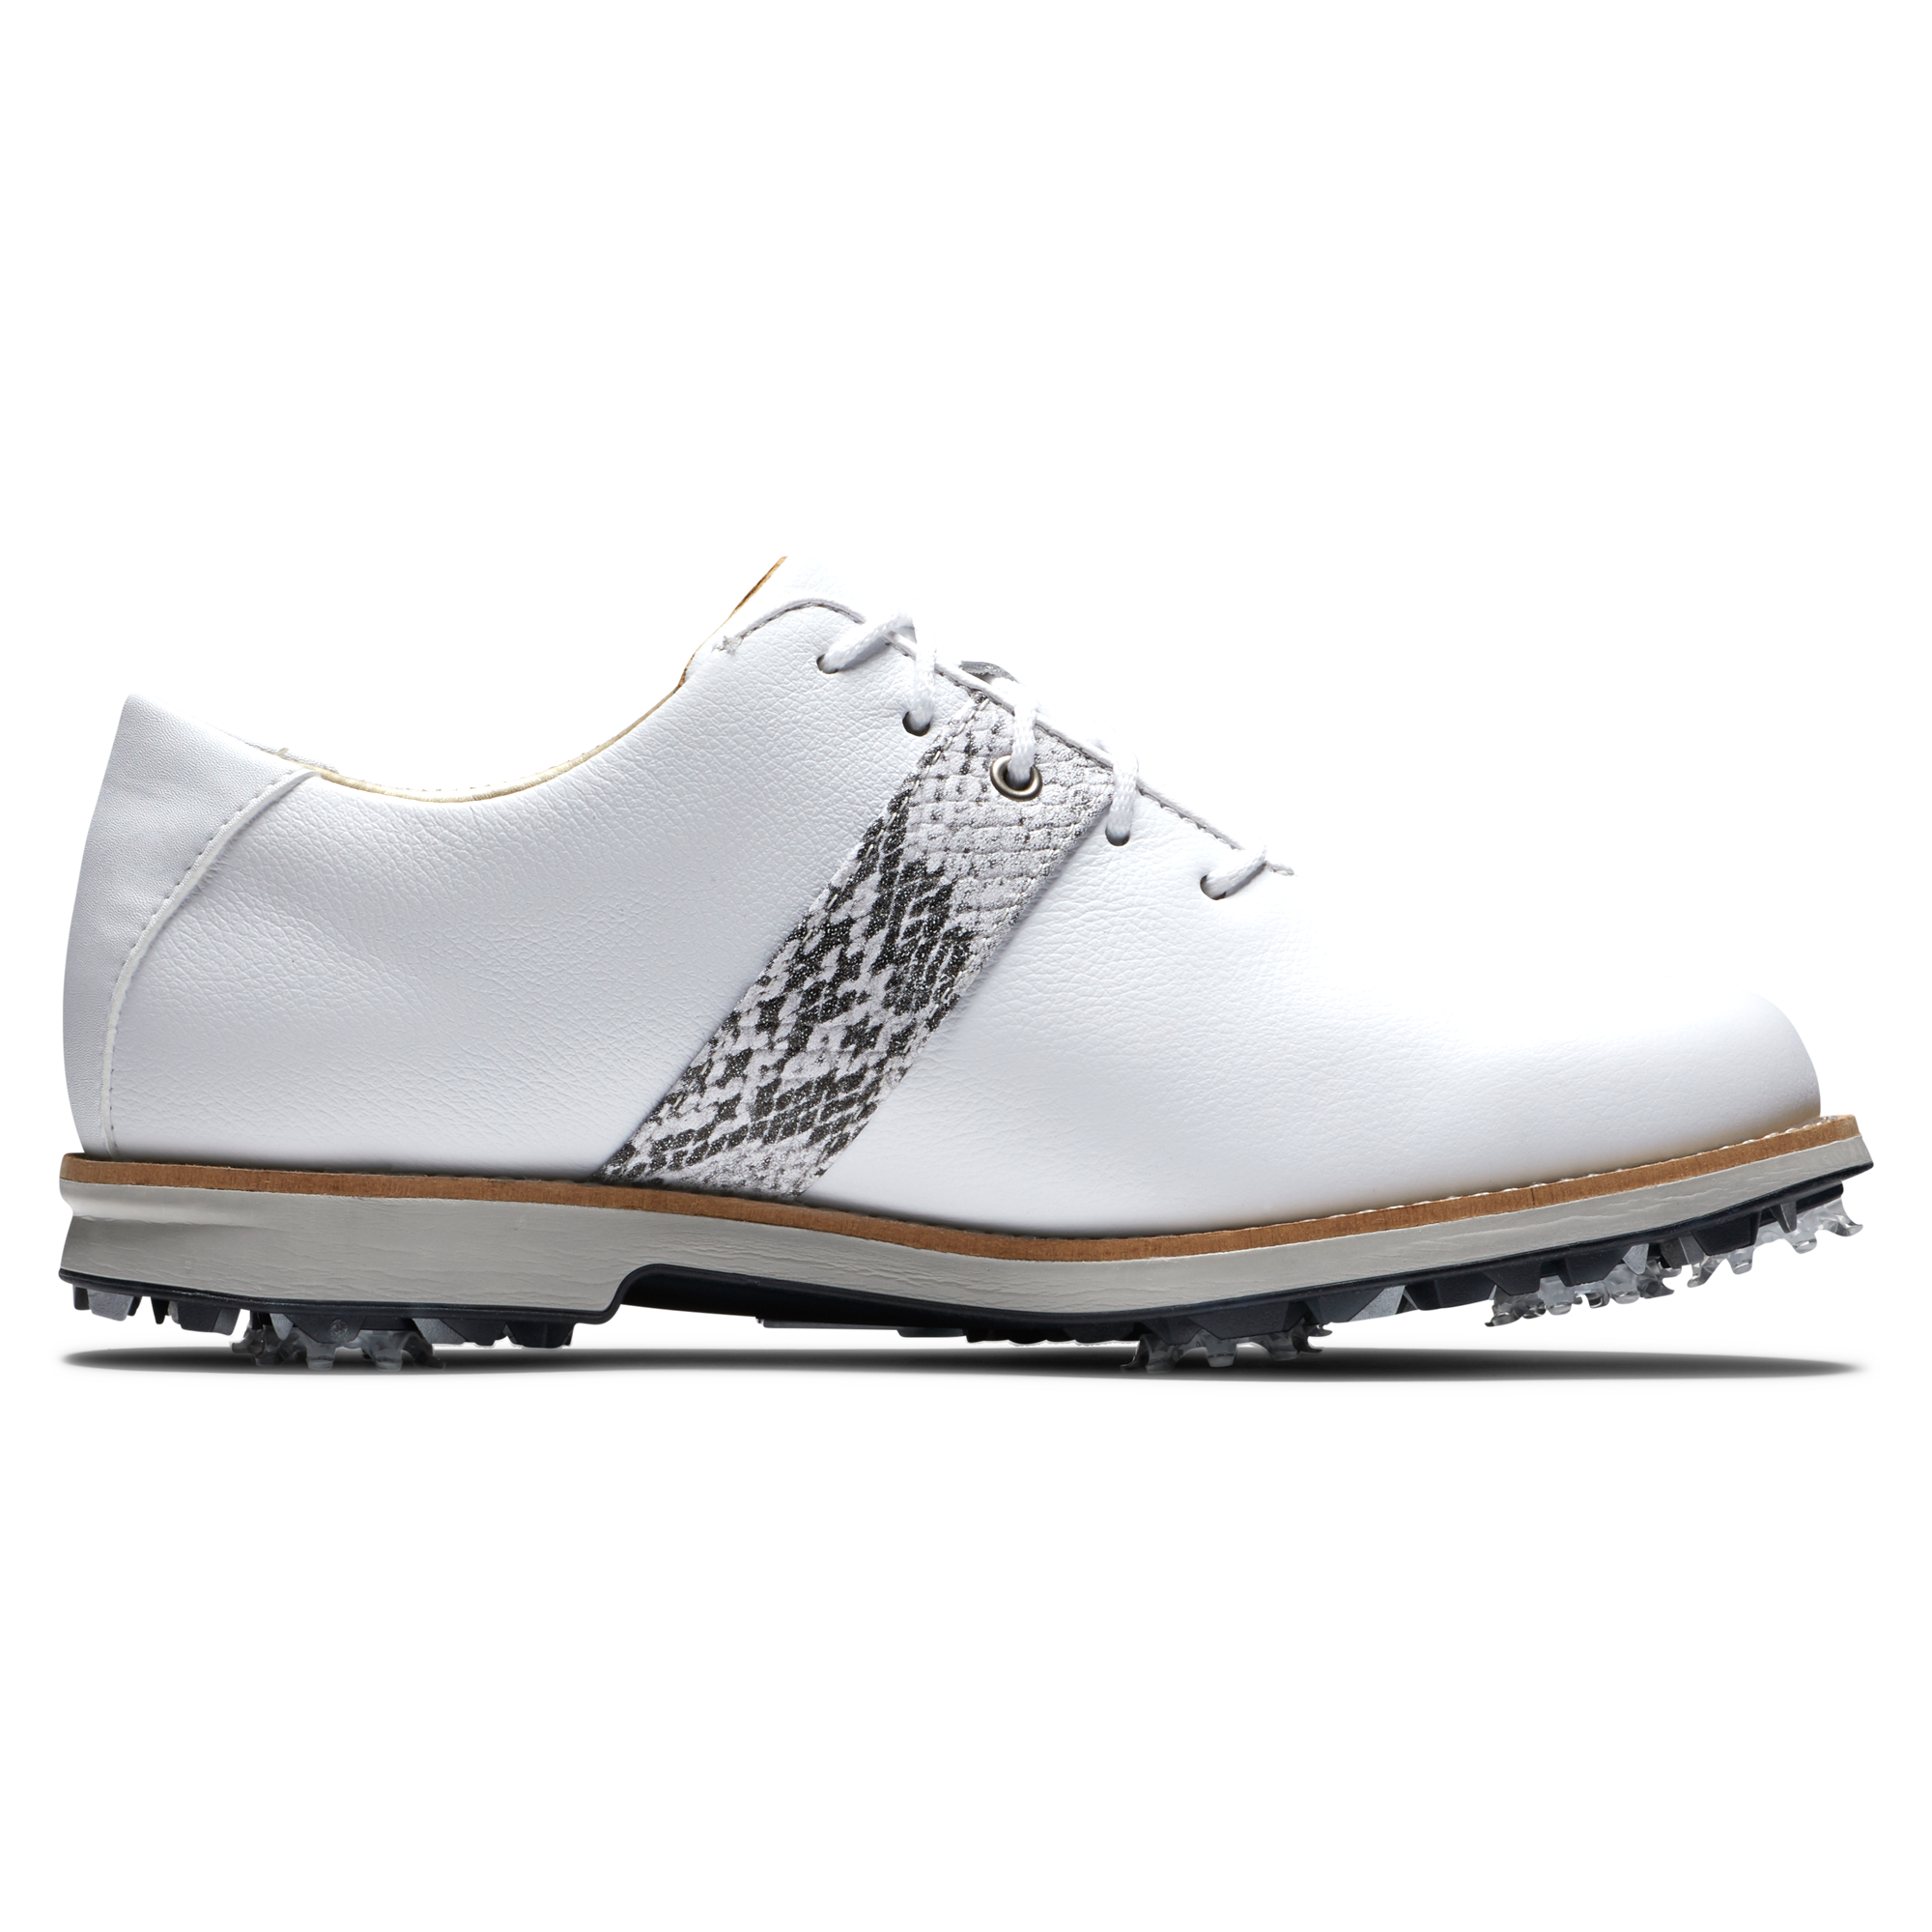 FootJoy Premiere Series Packard Golf Shoe Review - National Club Golfer